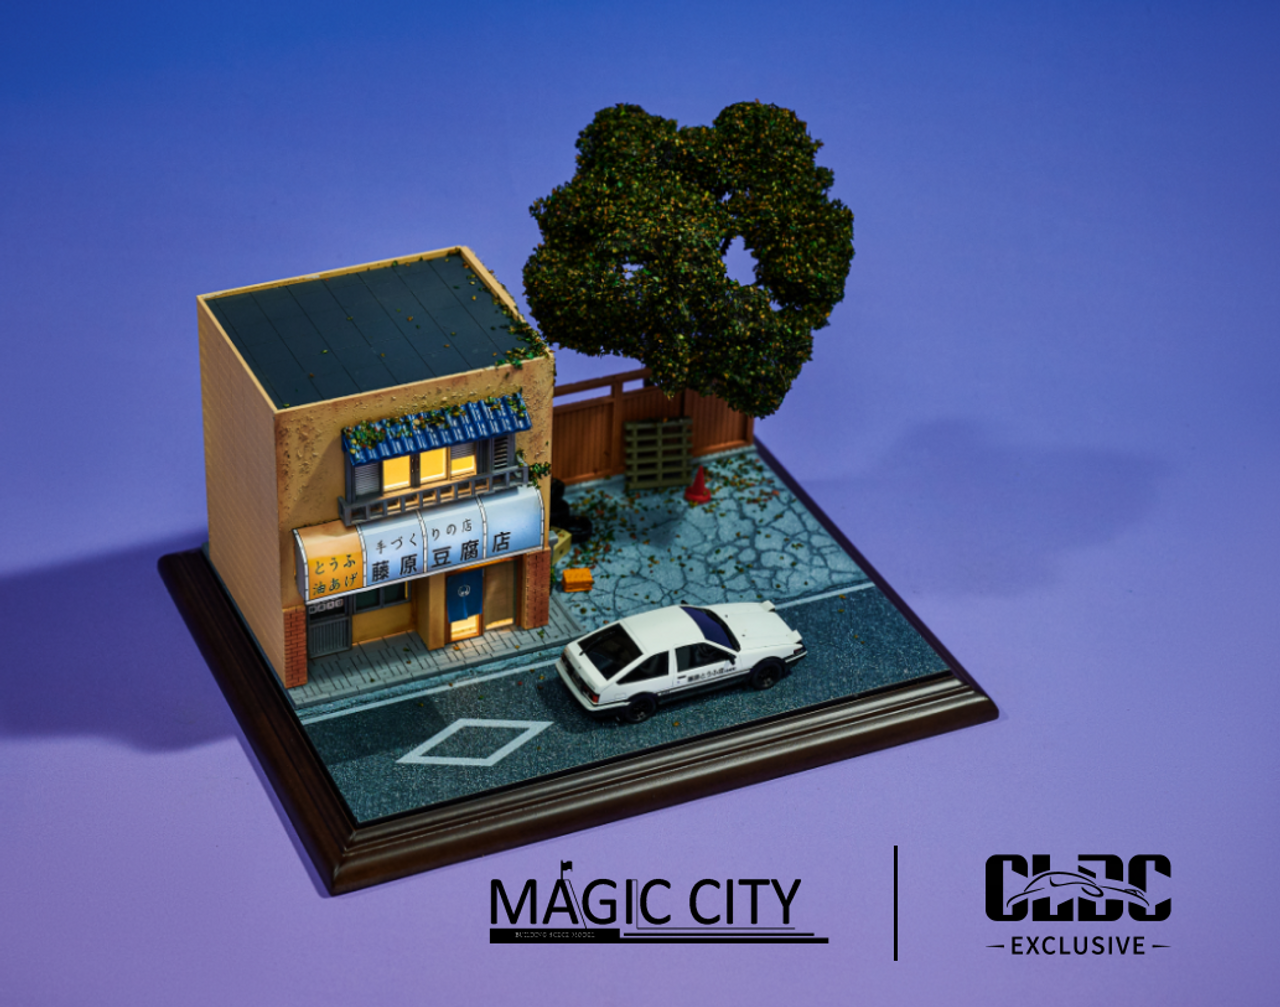 1/64 Magic City Initial D Fujiwara Tofu Shop Diorama Model (cars & figures NOT included)